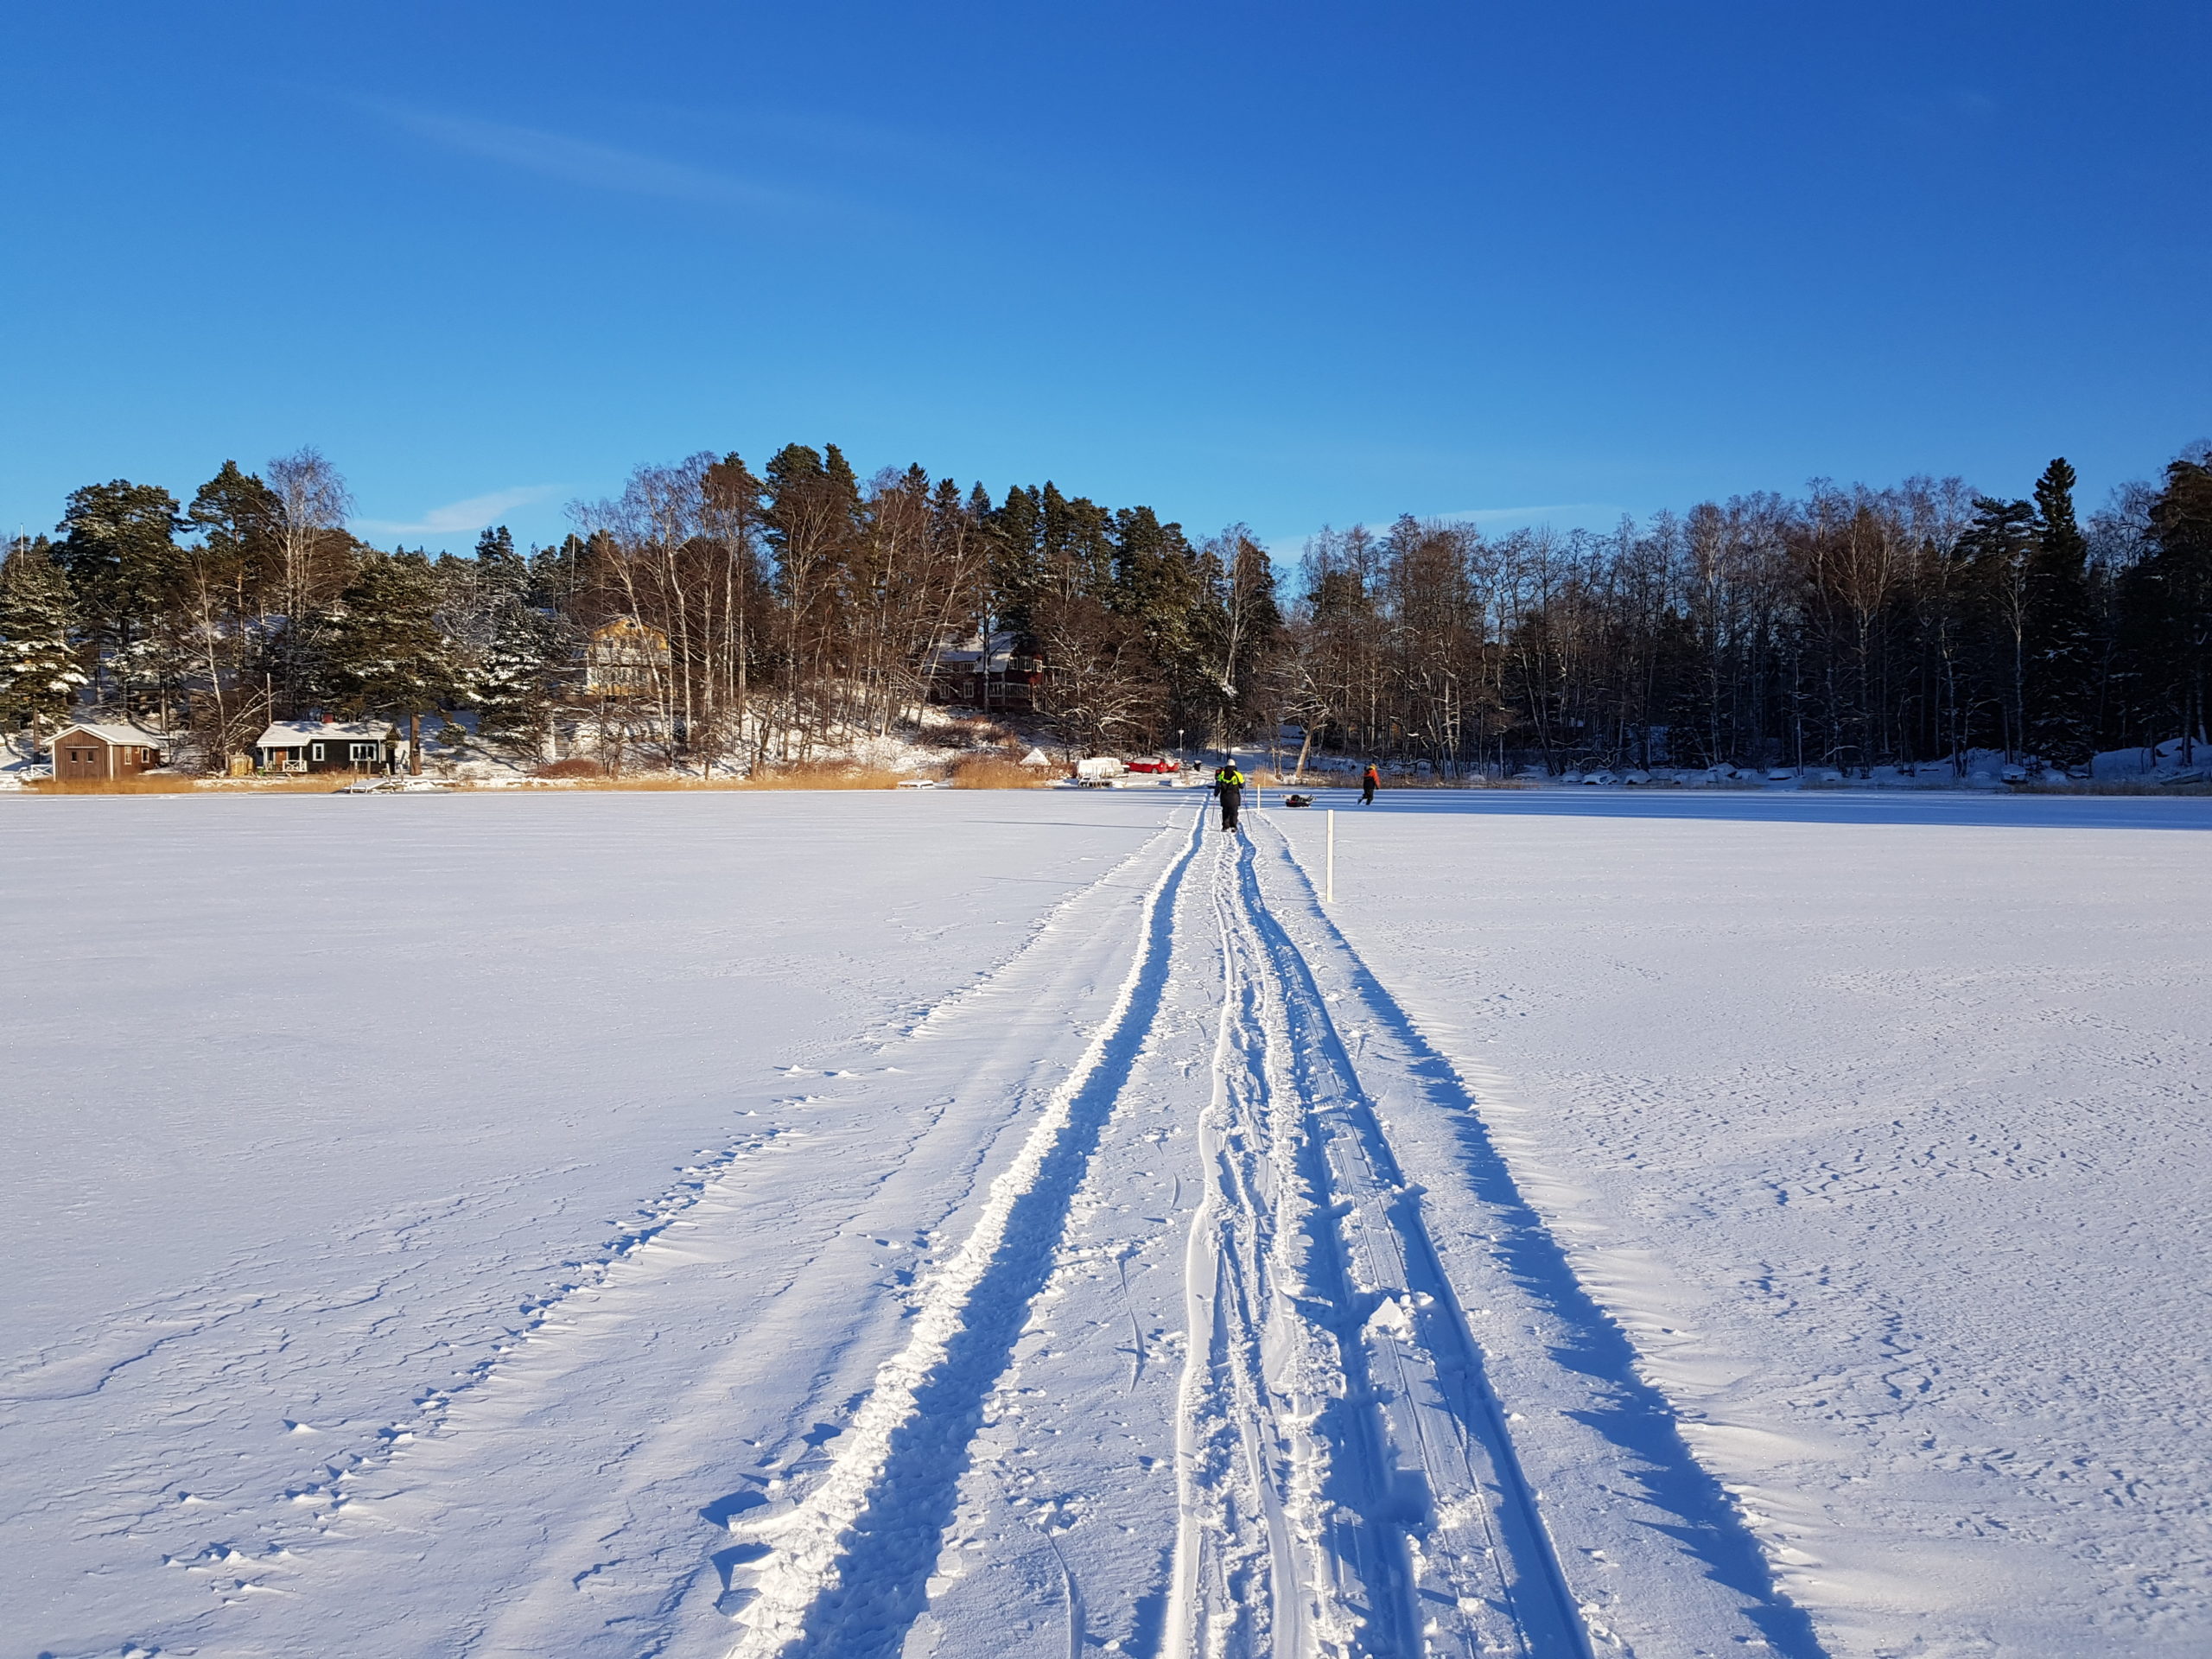 Walk on ice -feel the freedom and fresh air